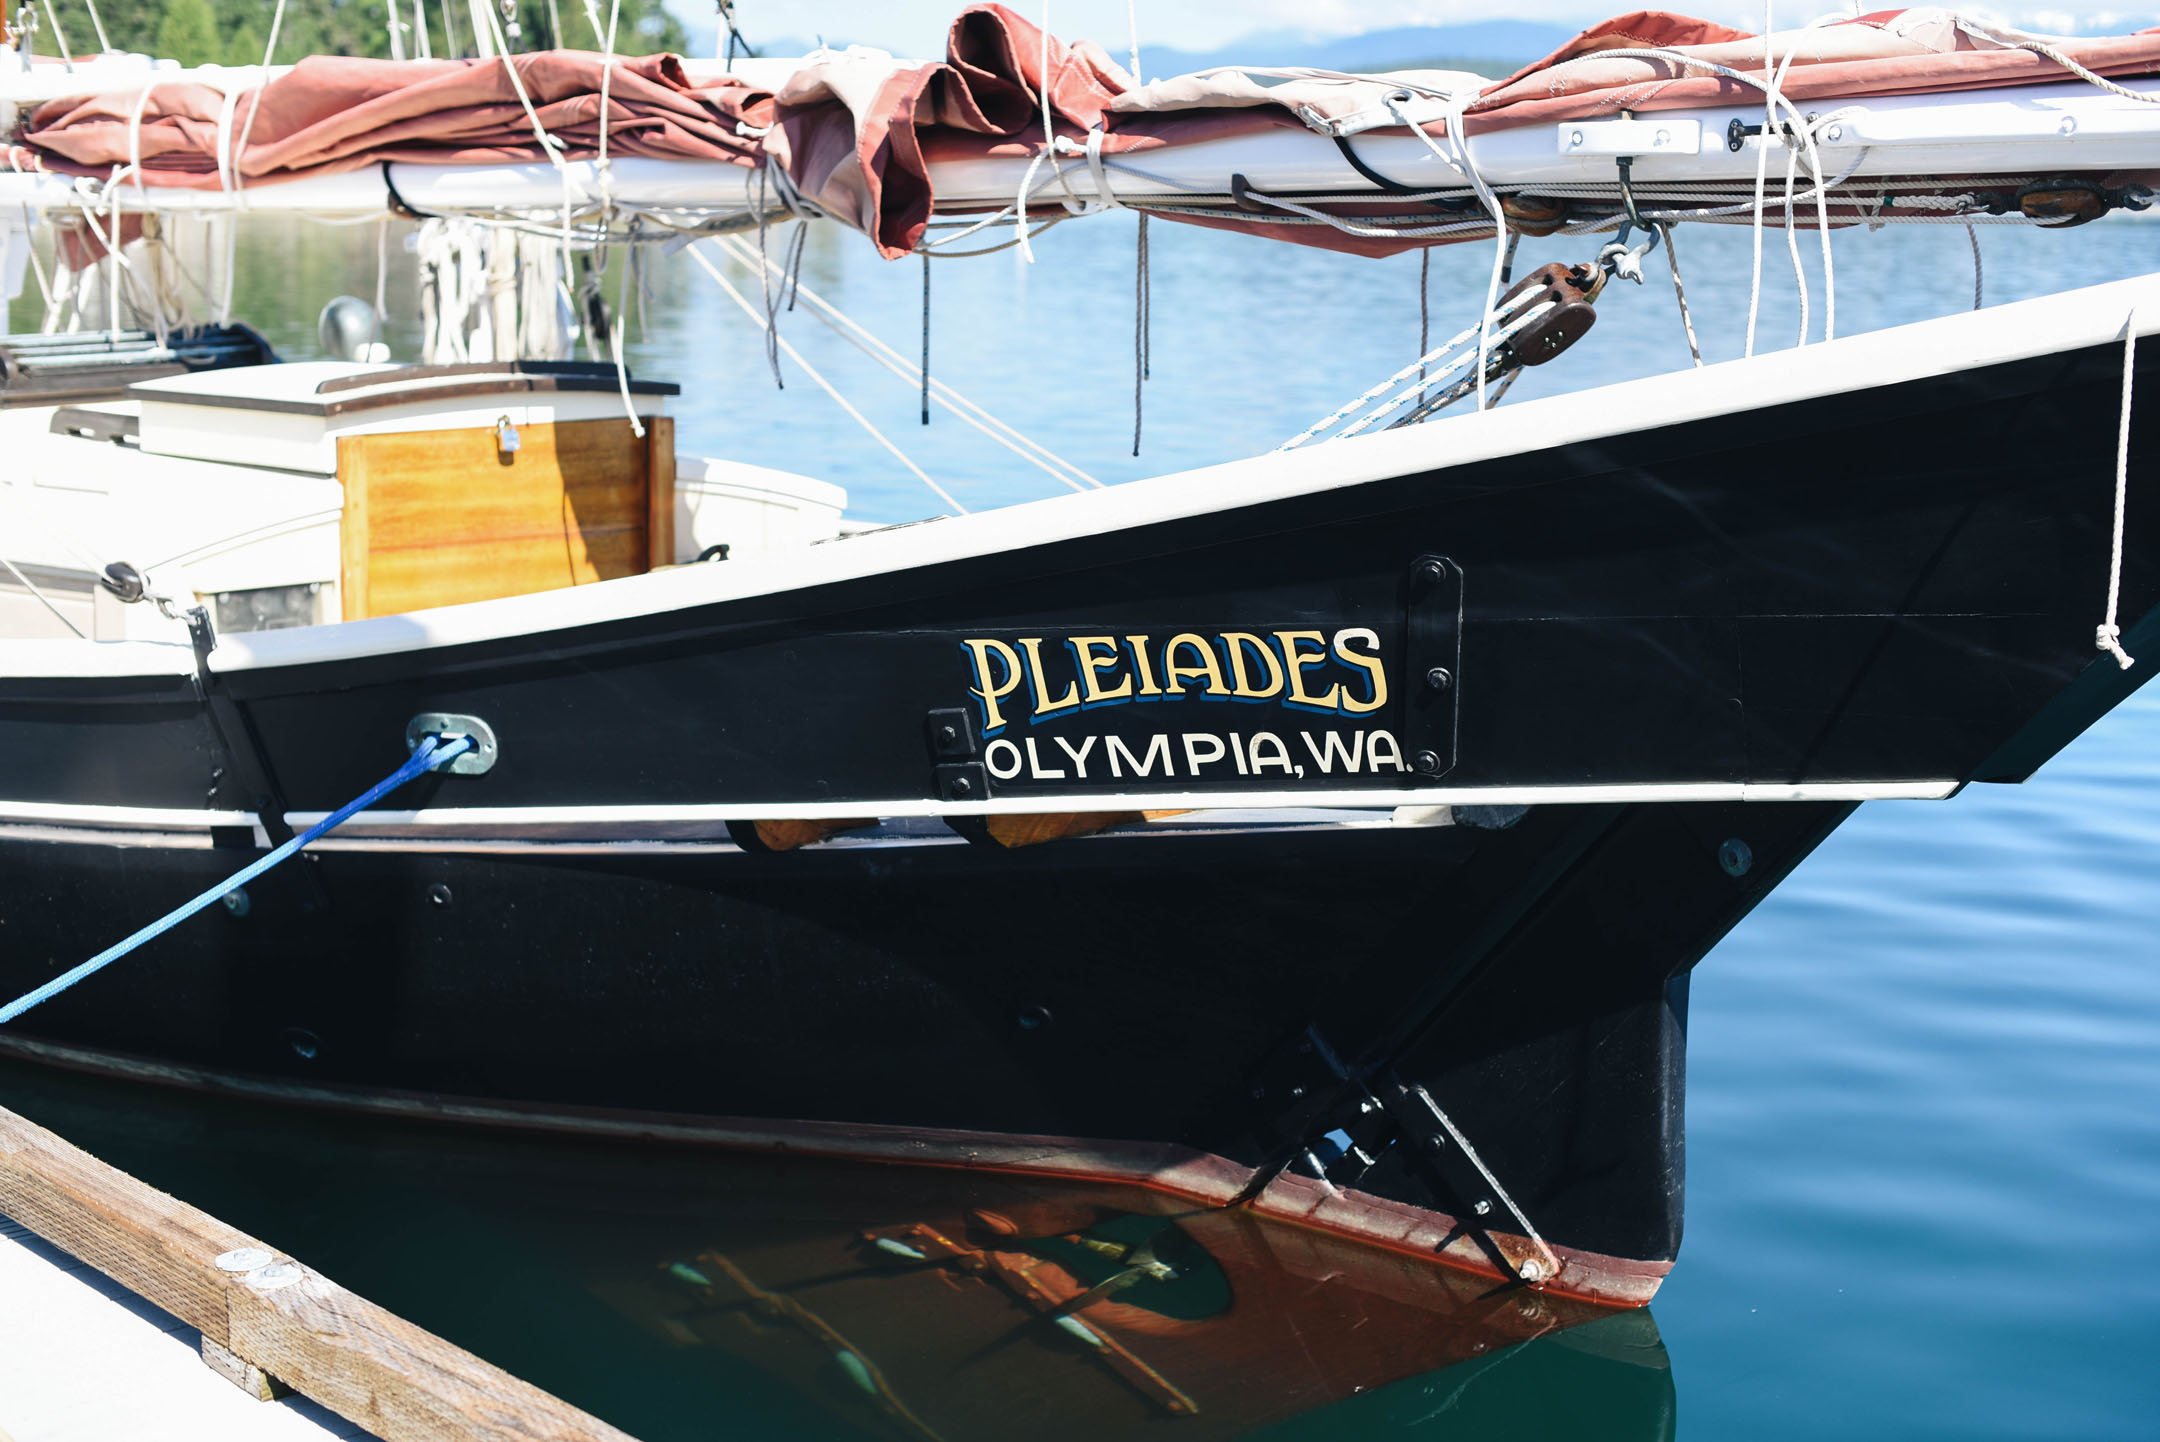 Pleiades olympia washington boat